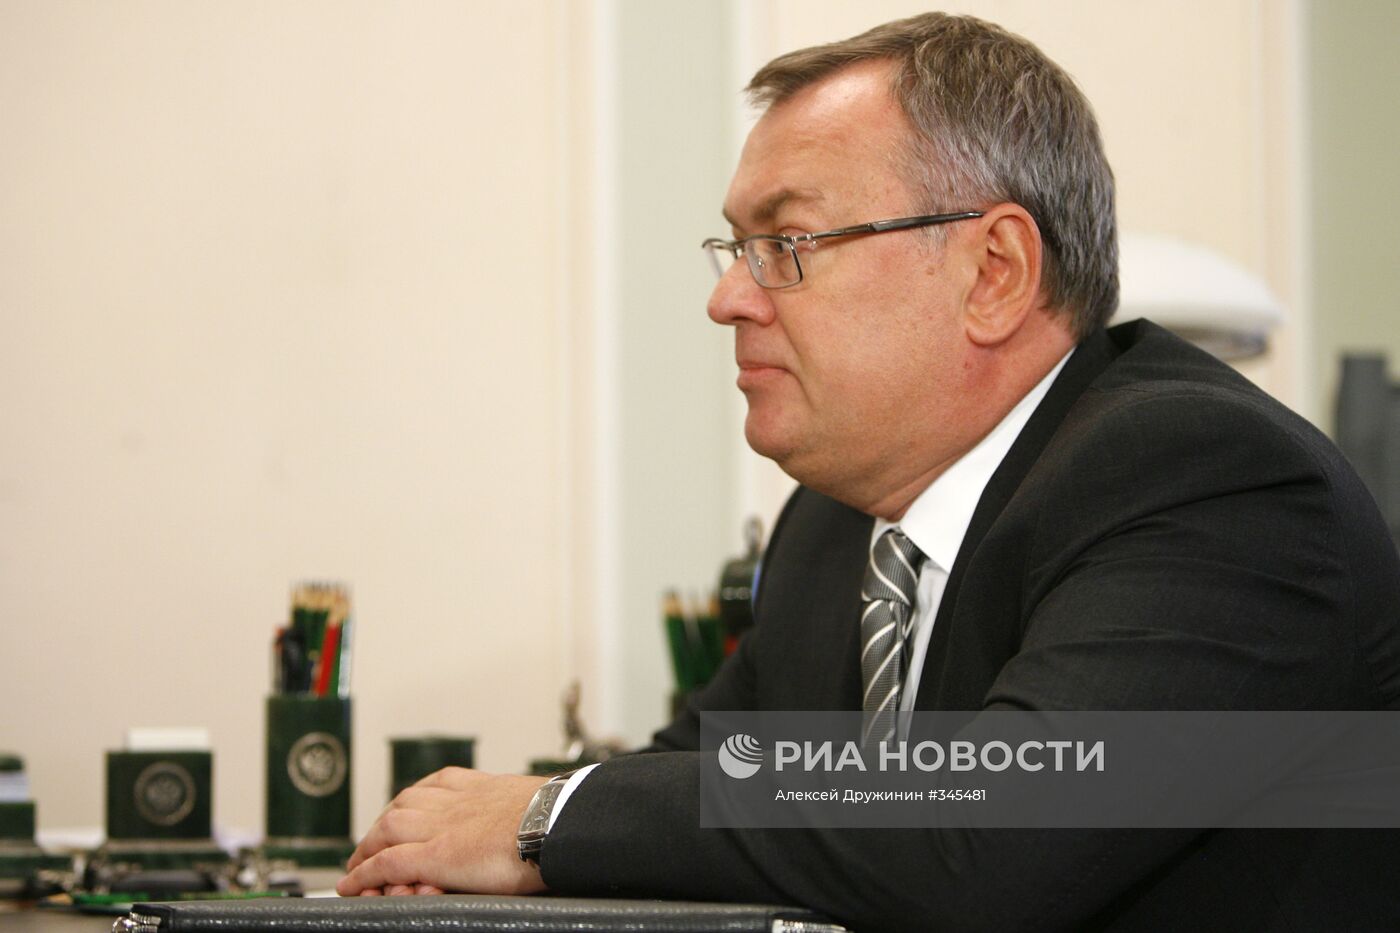 Президент ВТБ Андрей Костин